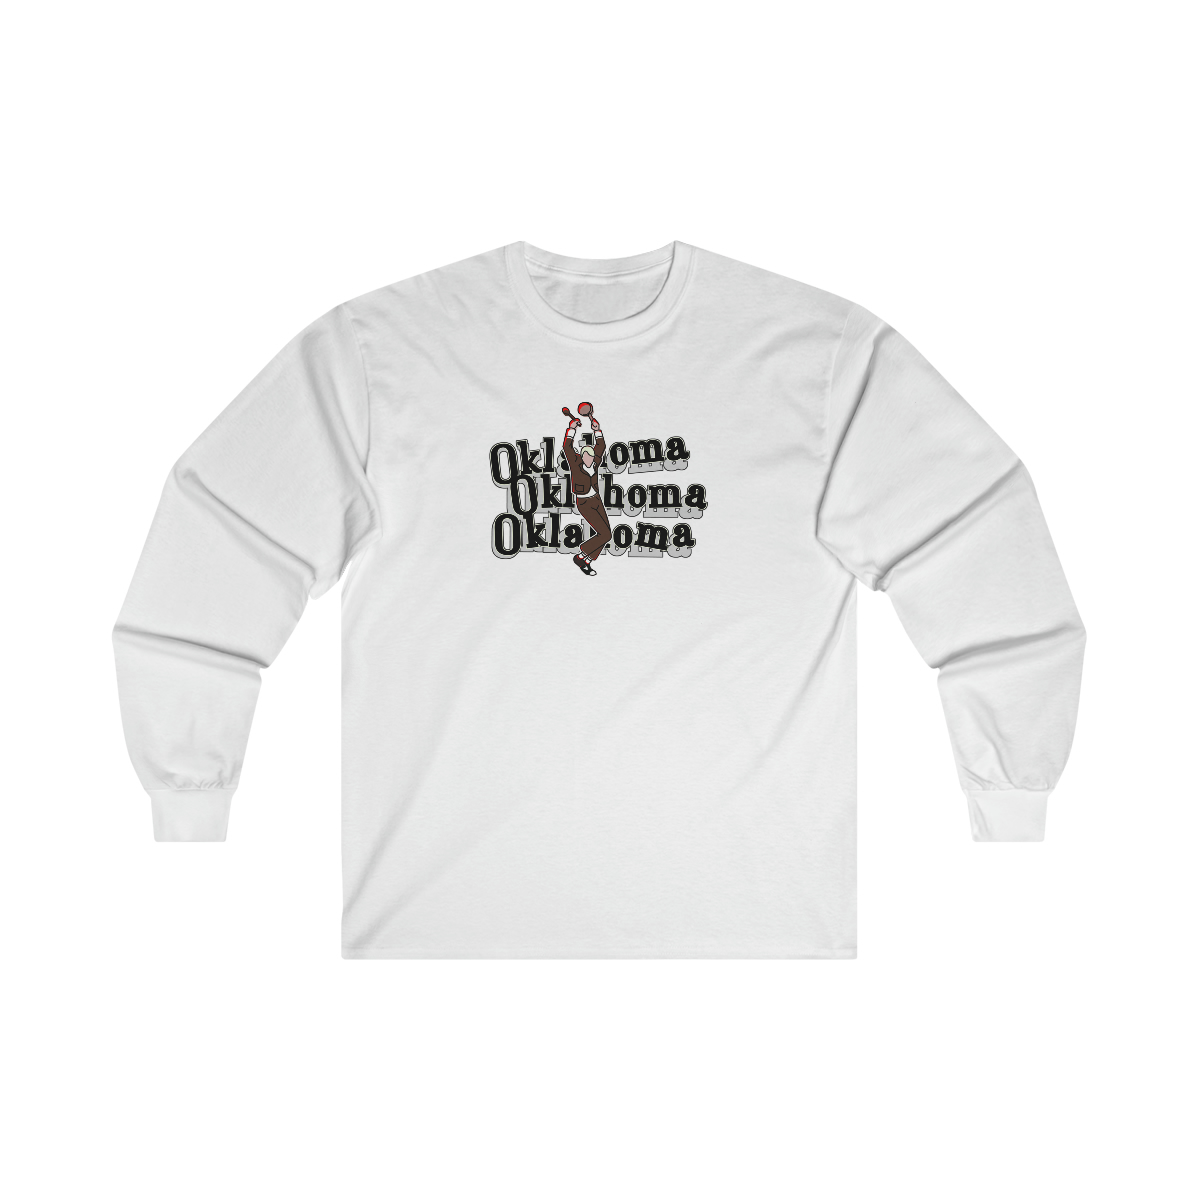 Oklahoma! (light shirts) - Unisex Ultra Cotton Long Sleeve Tee